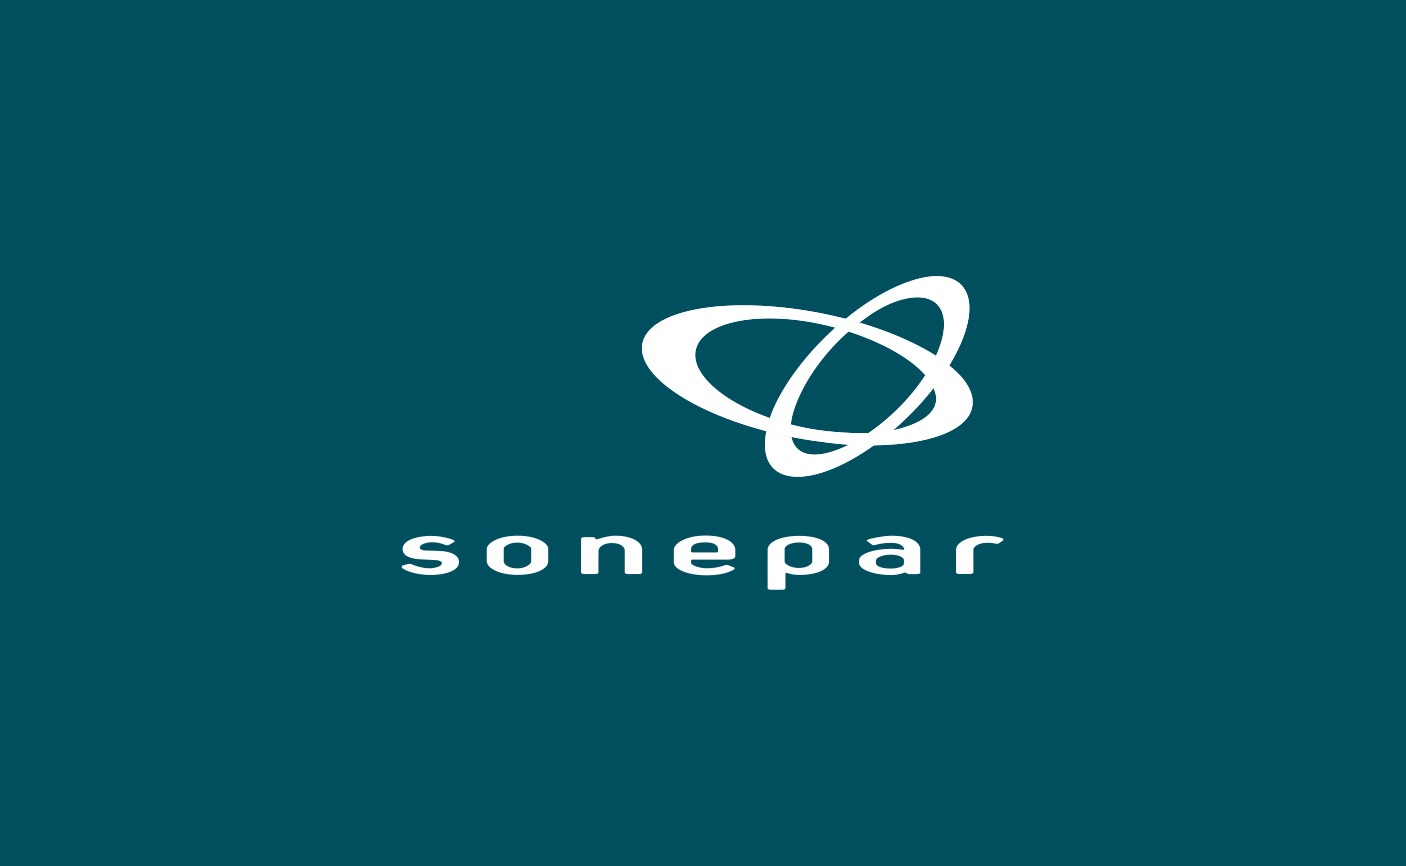 Sonepar - customer testimonial and customer reference